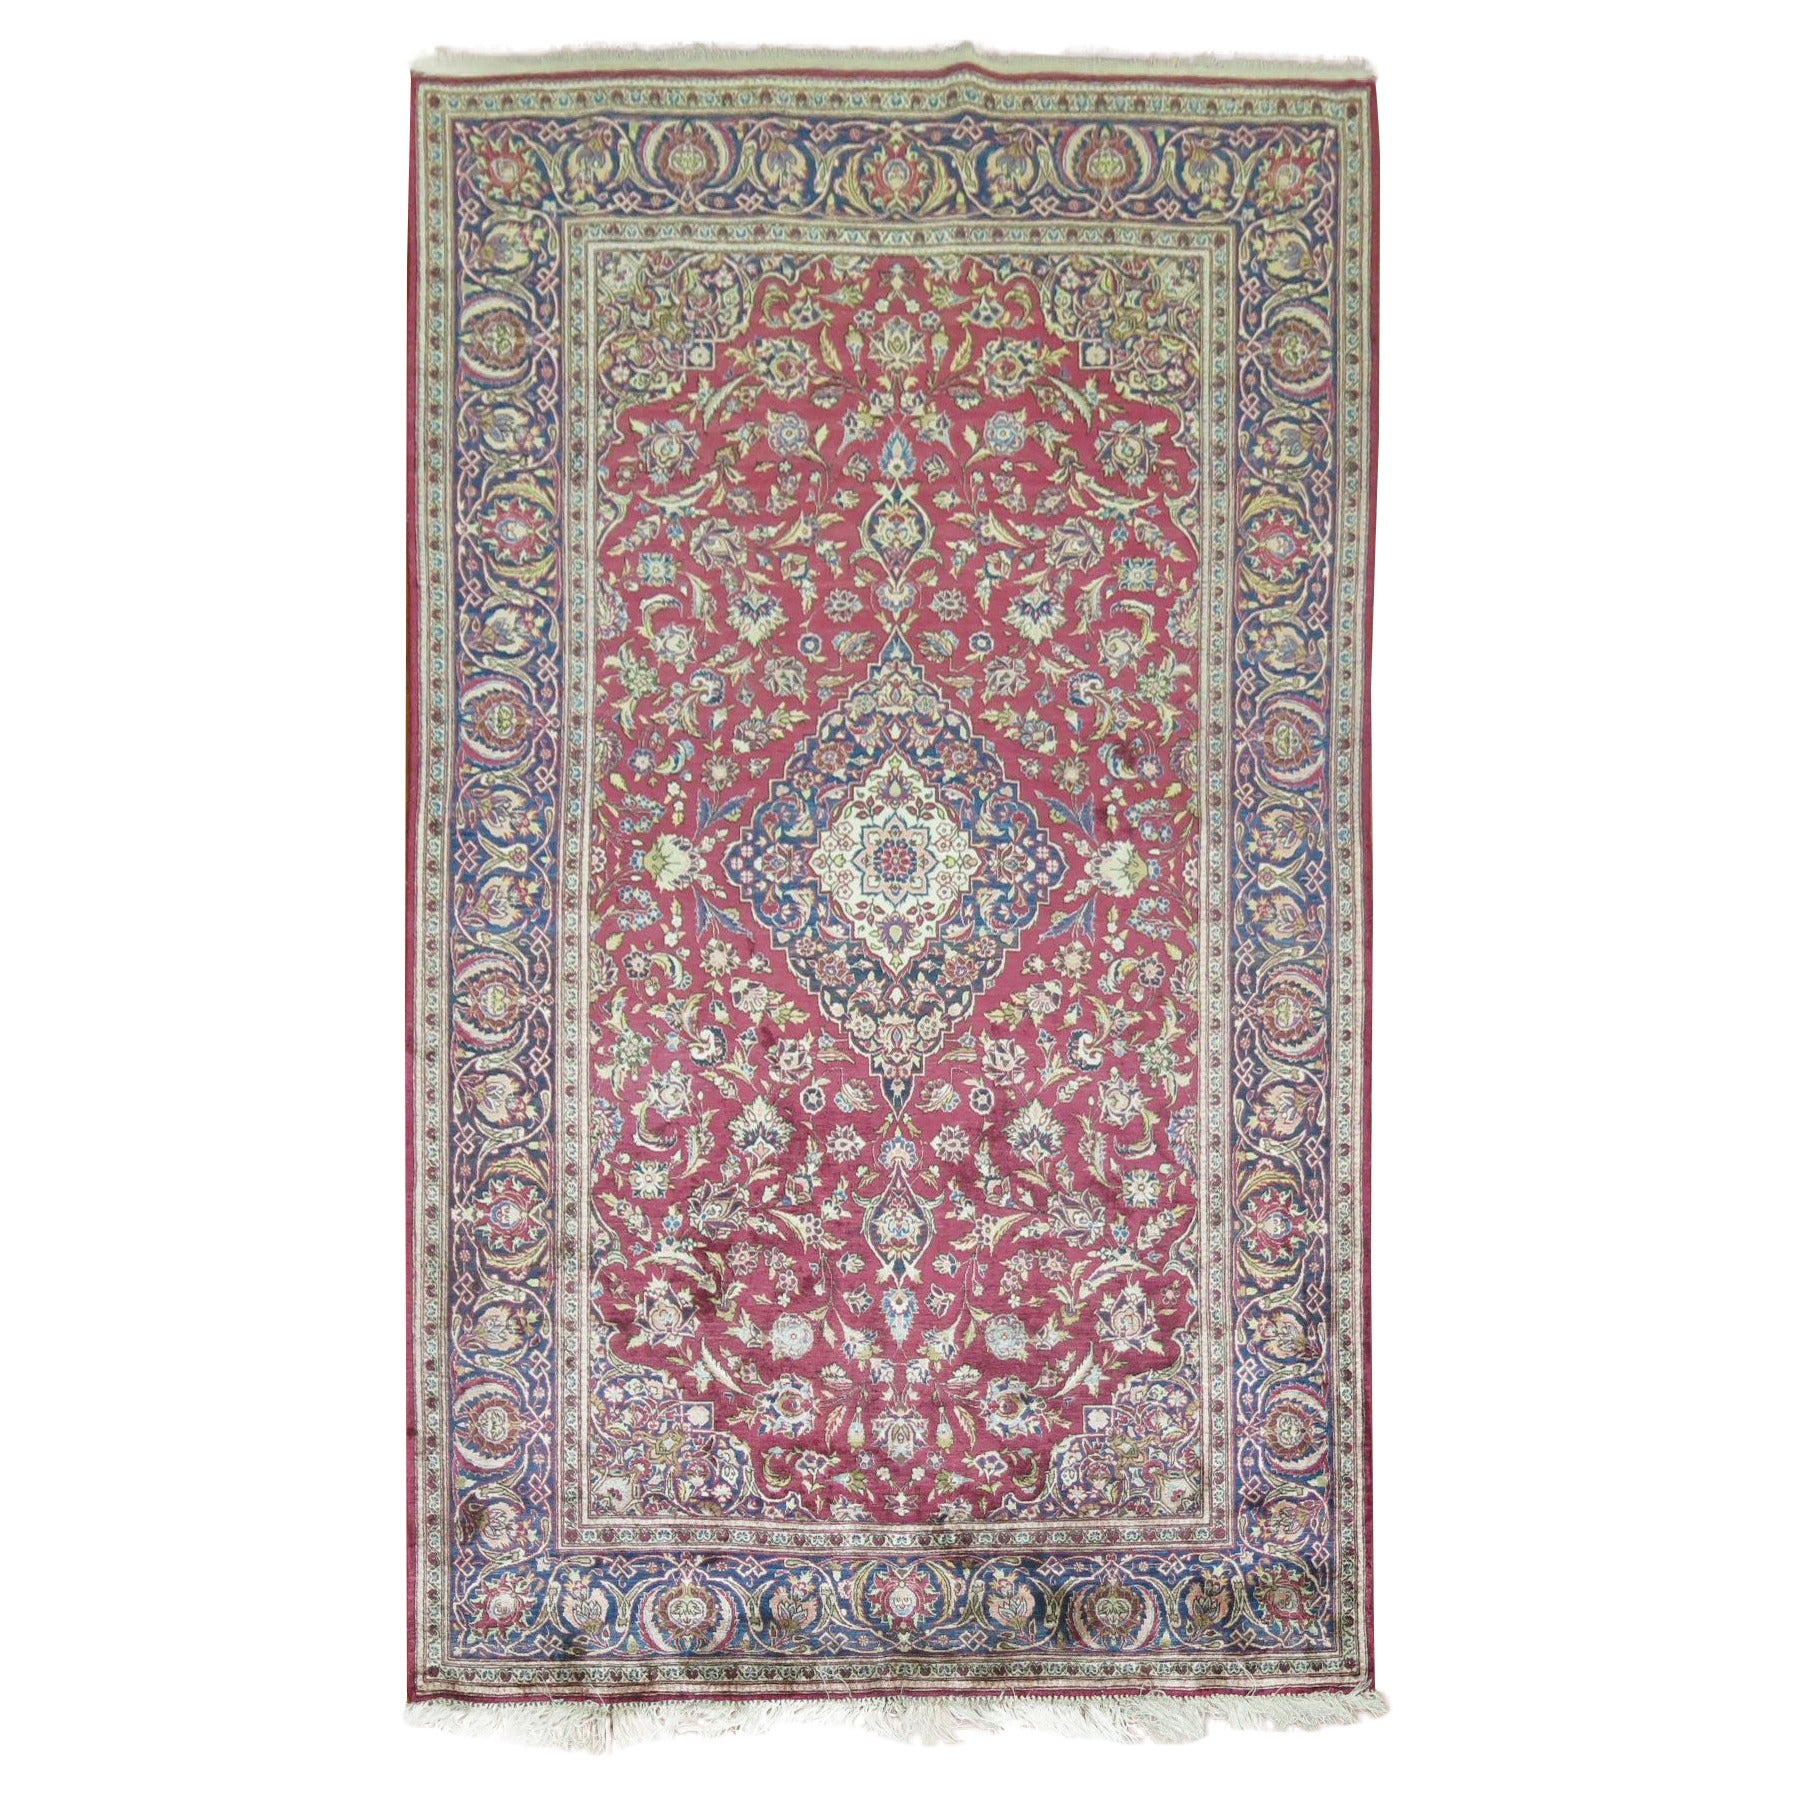 Antique Persian Silk Area Rug For Sale